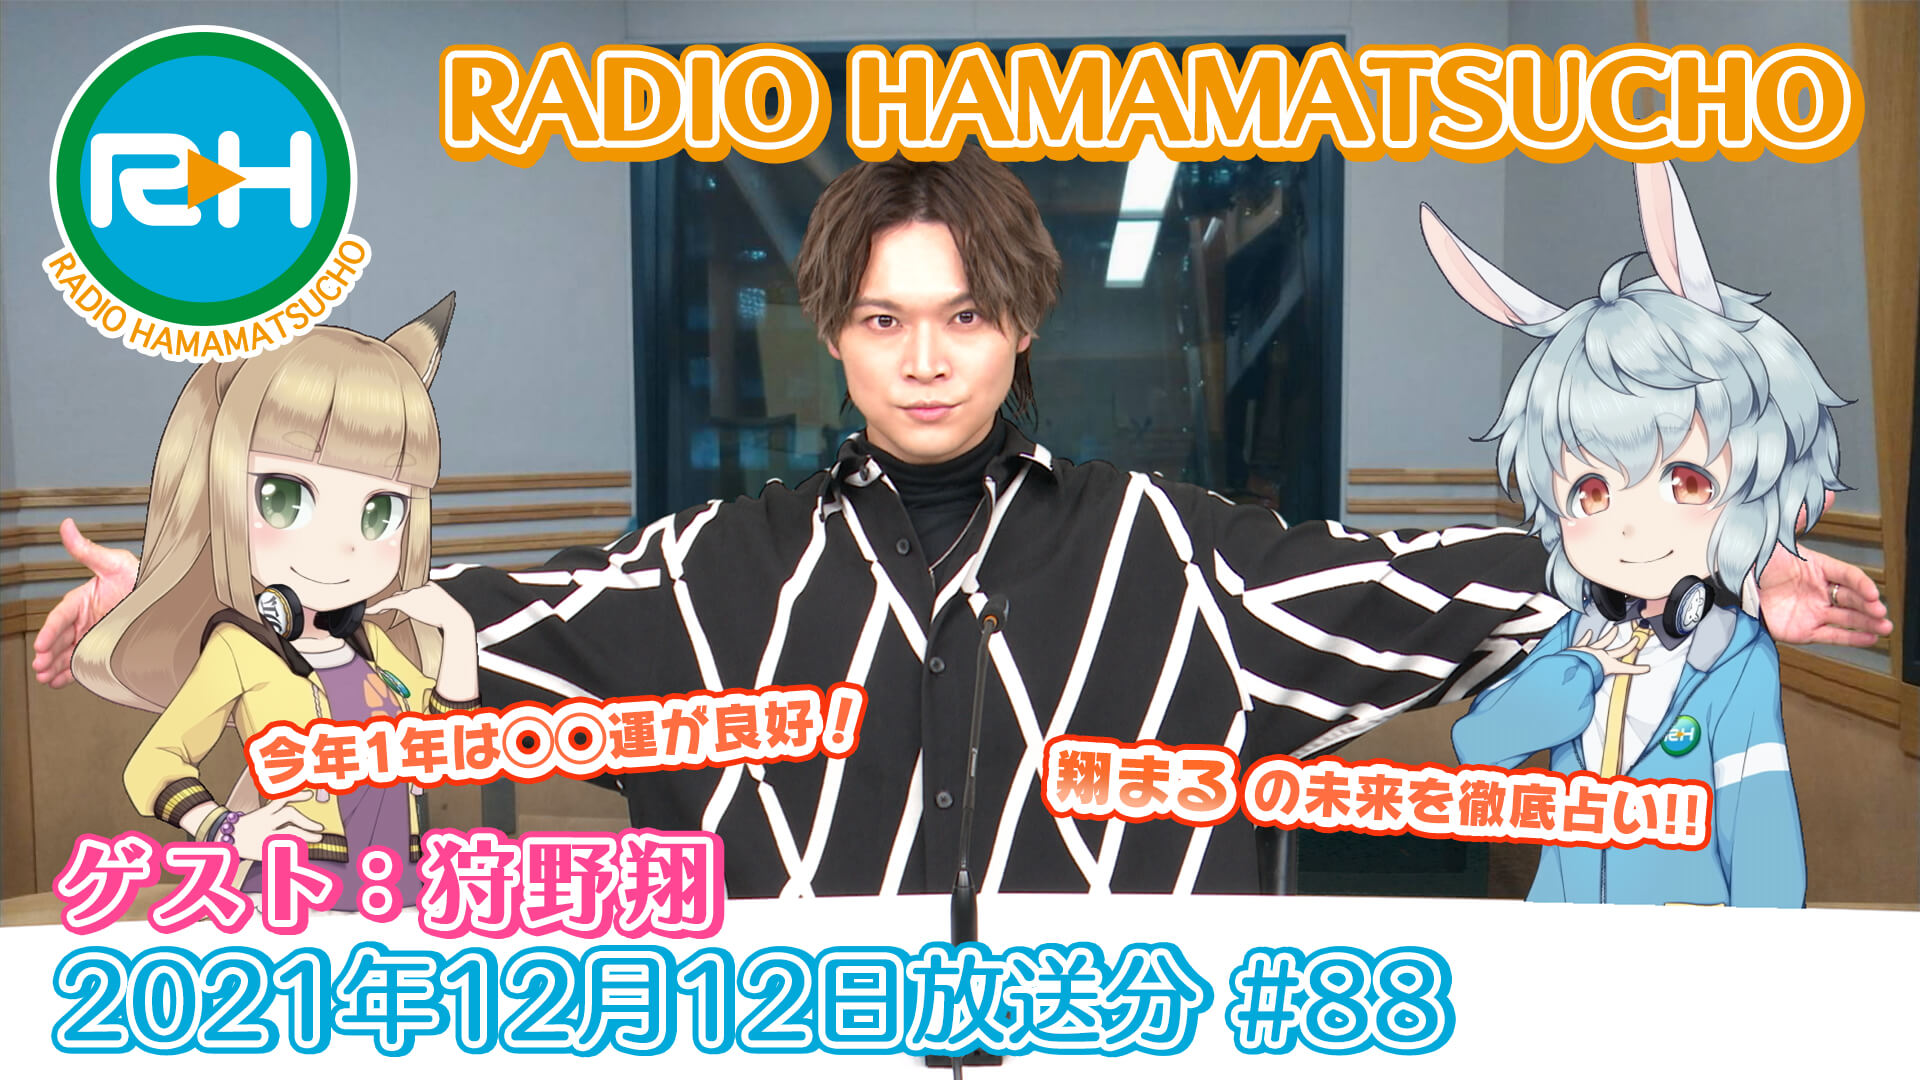 RADIO HAMAMATSUCHO 第88回 (2021年12月12日放送分) ゲスト: 狩野翔